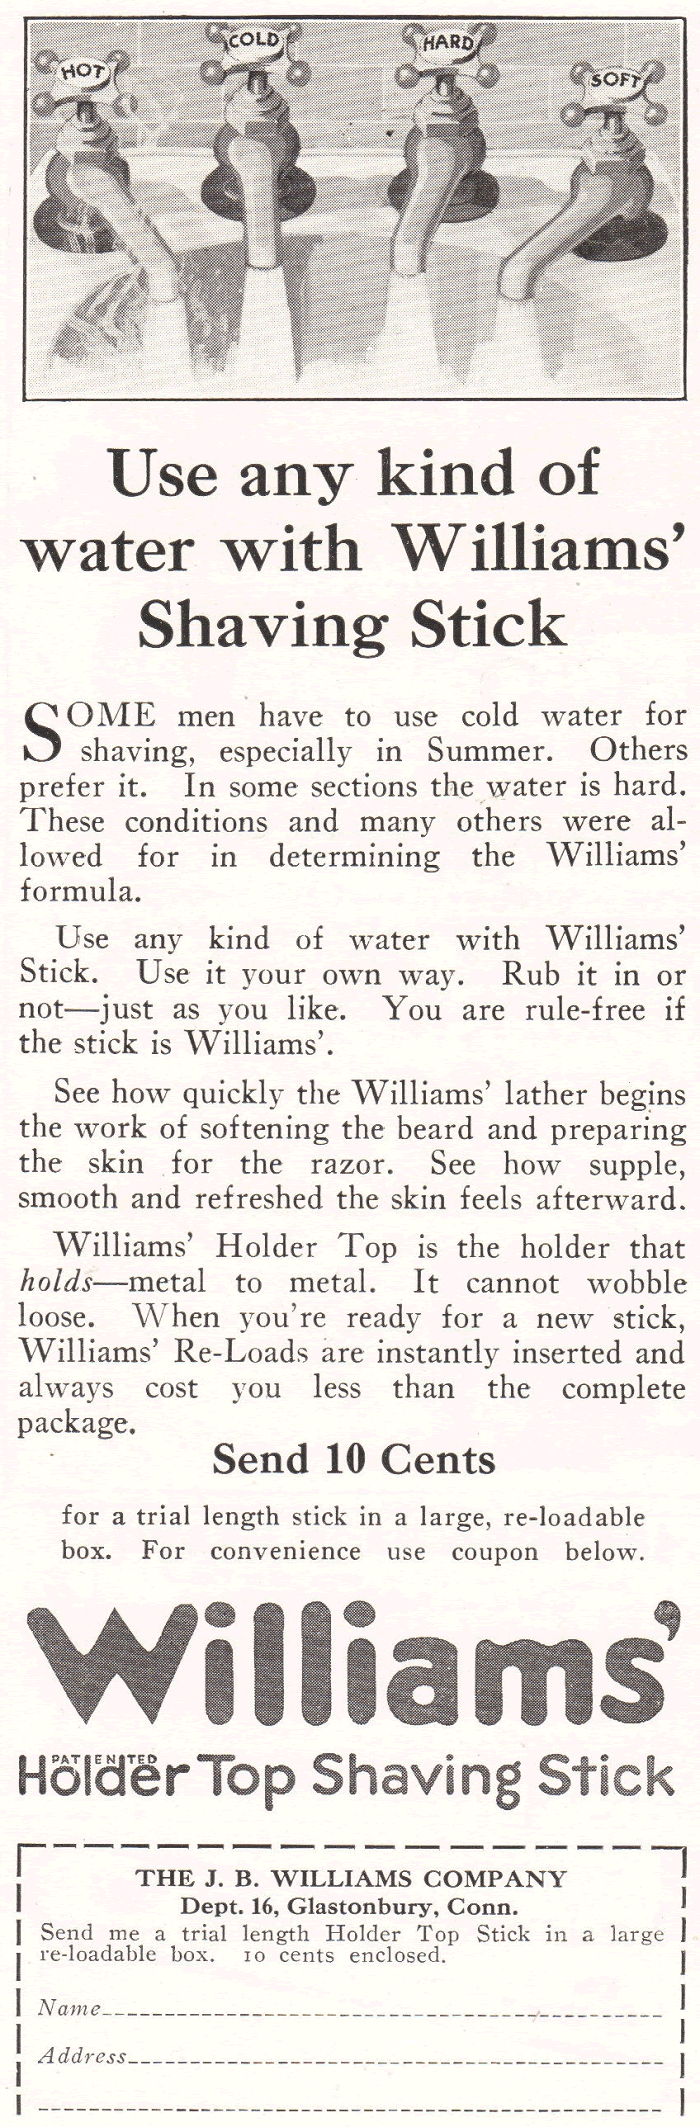 Williams' Shaving Stick Ad of 1922